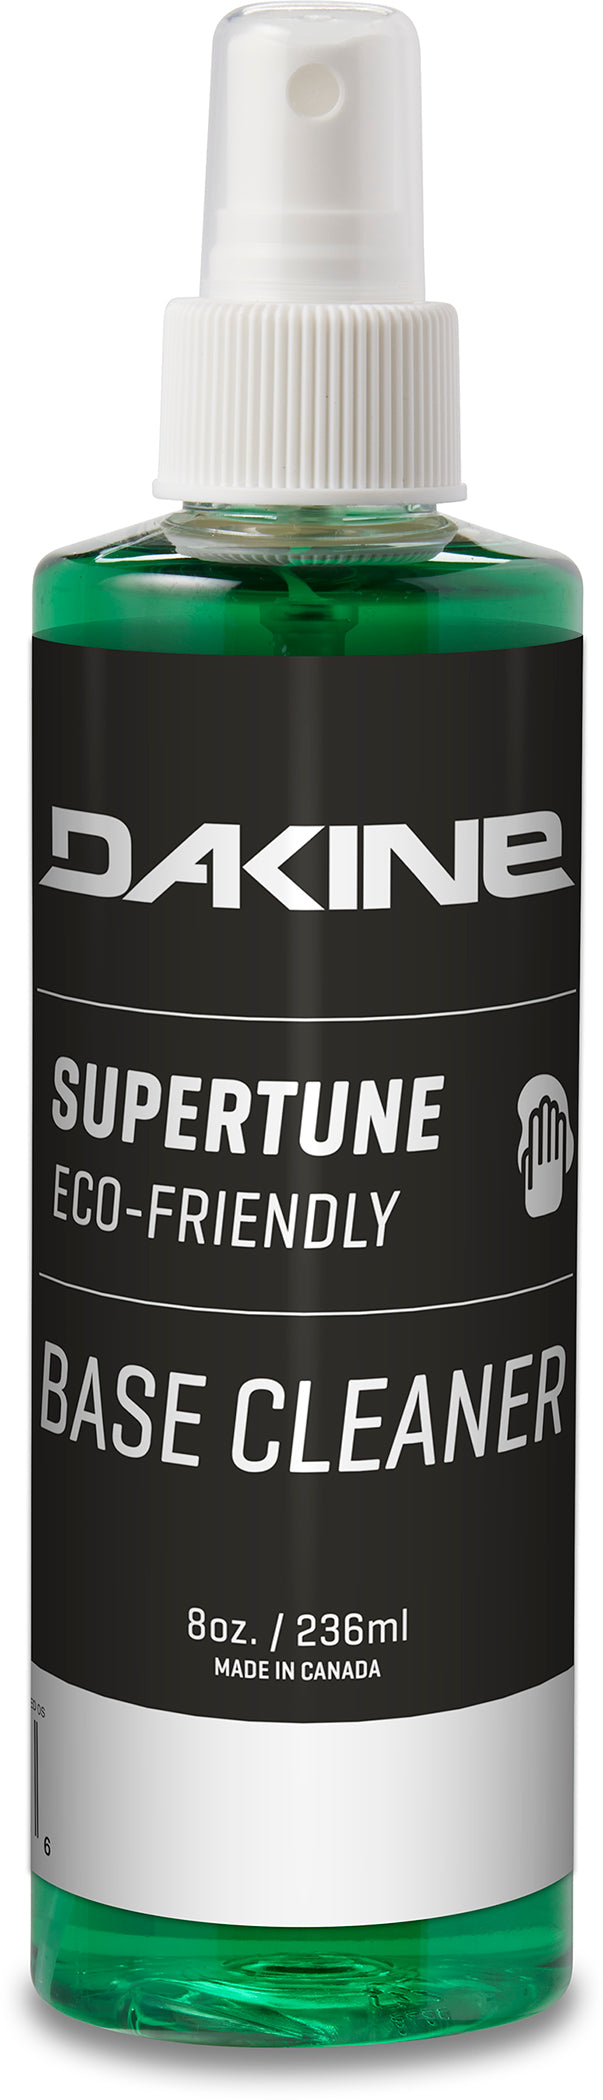 Dakine Supertune Base Cleaner